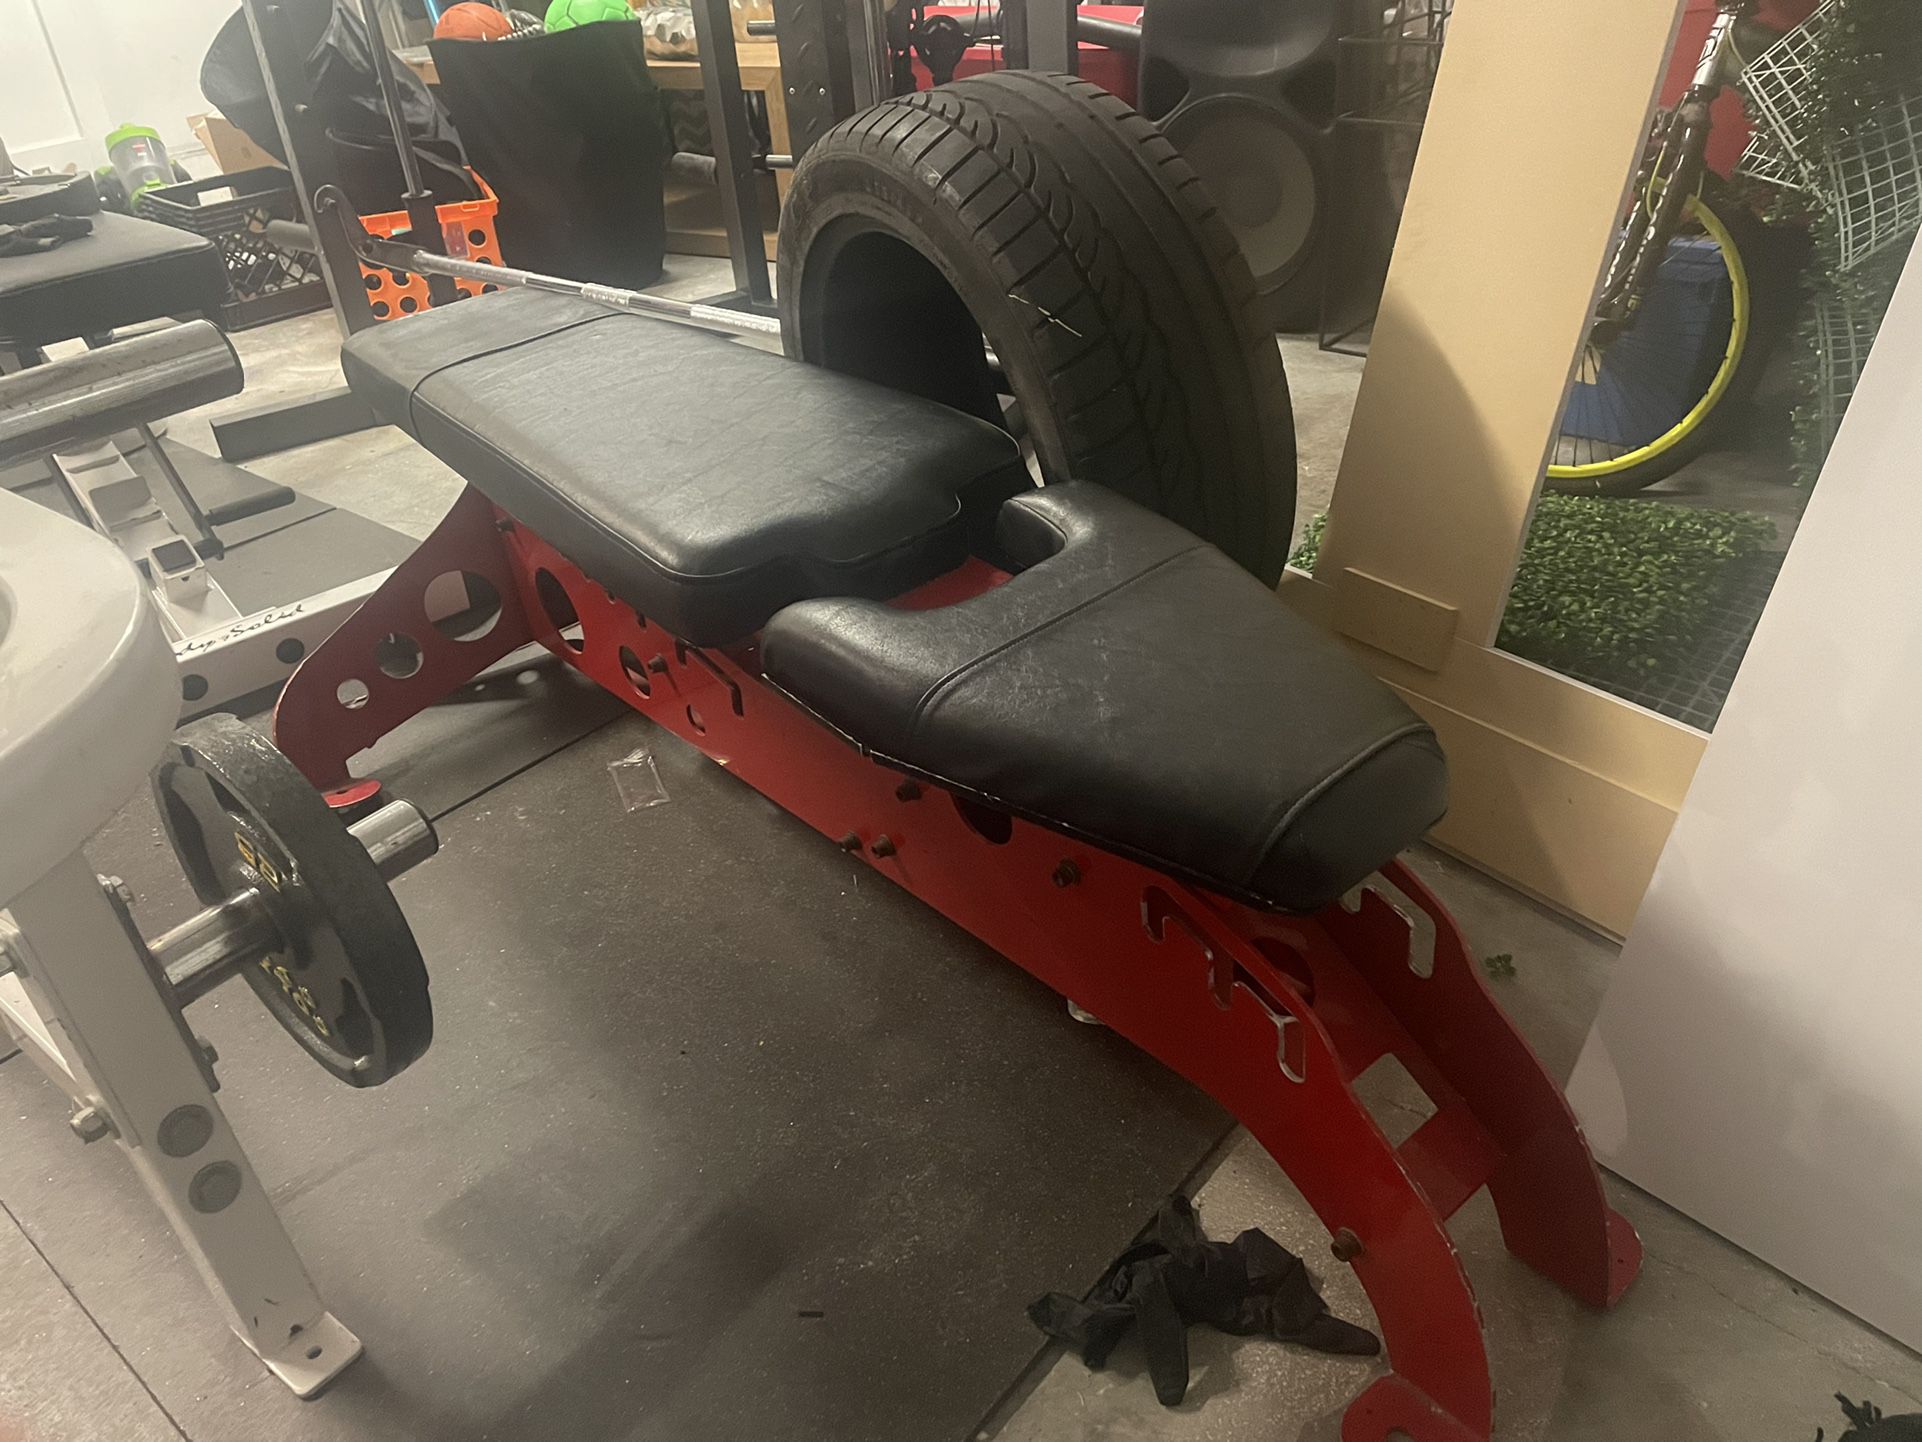 Workout Bench - Won’t Lift 